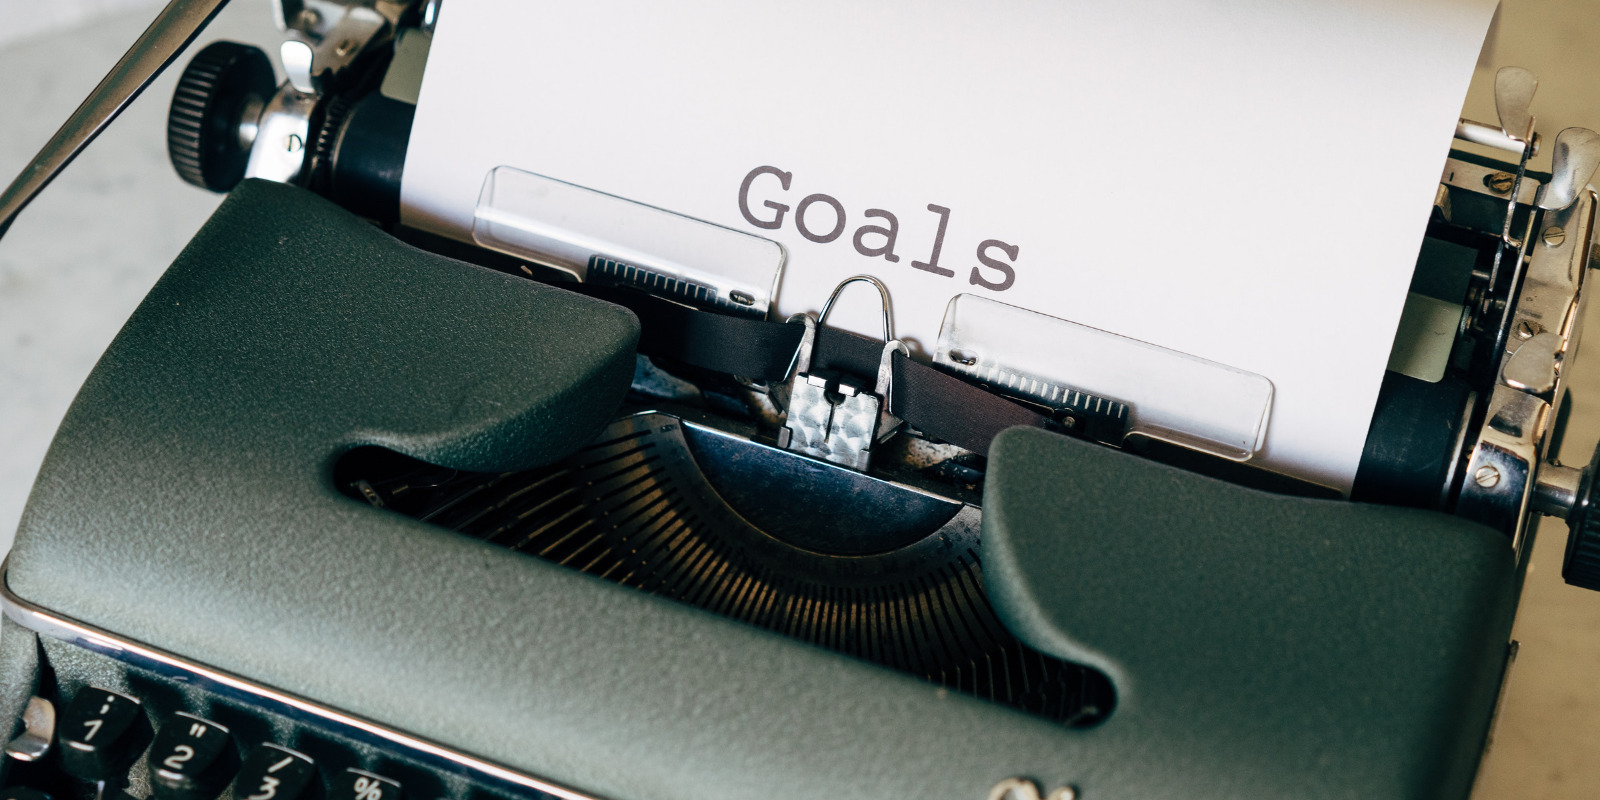 typerwriter with goals written on paper